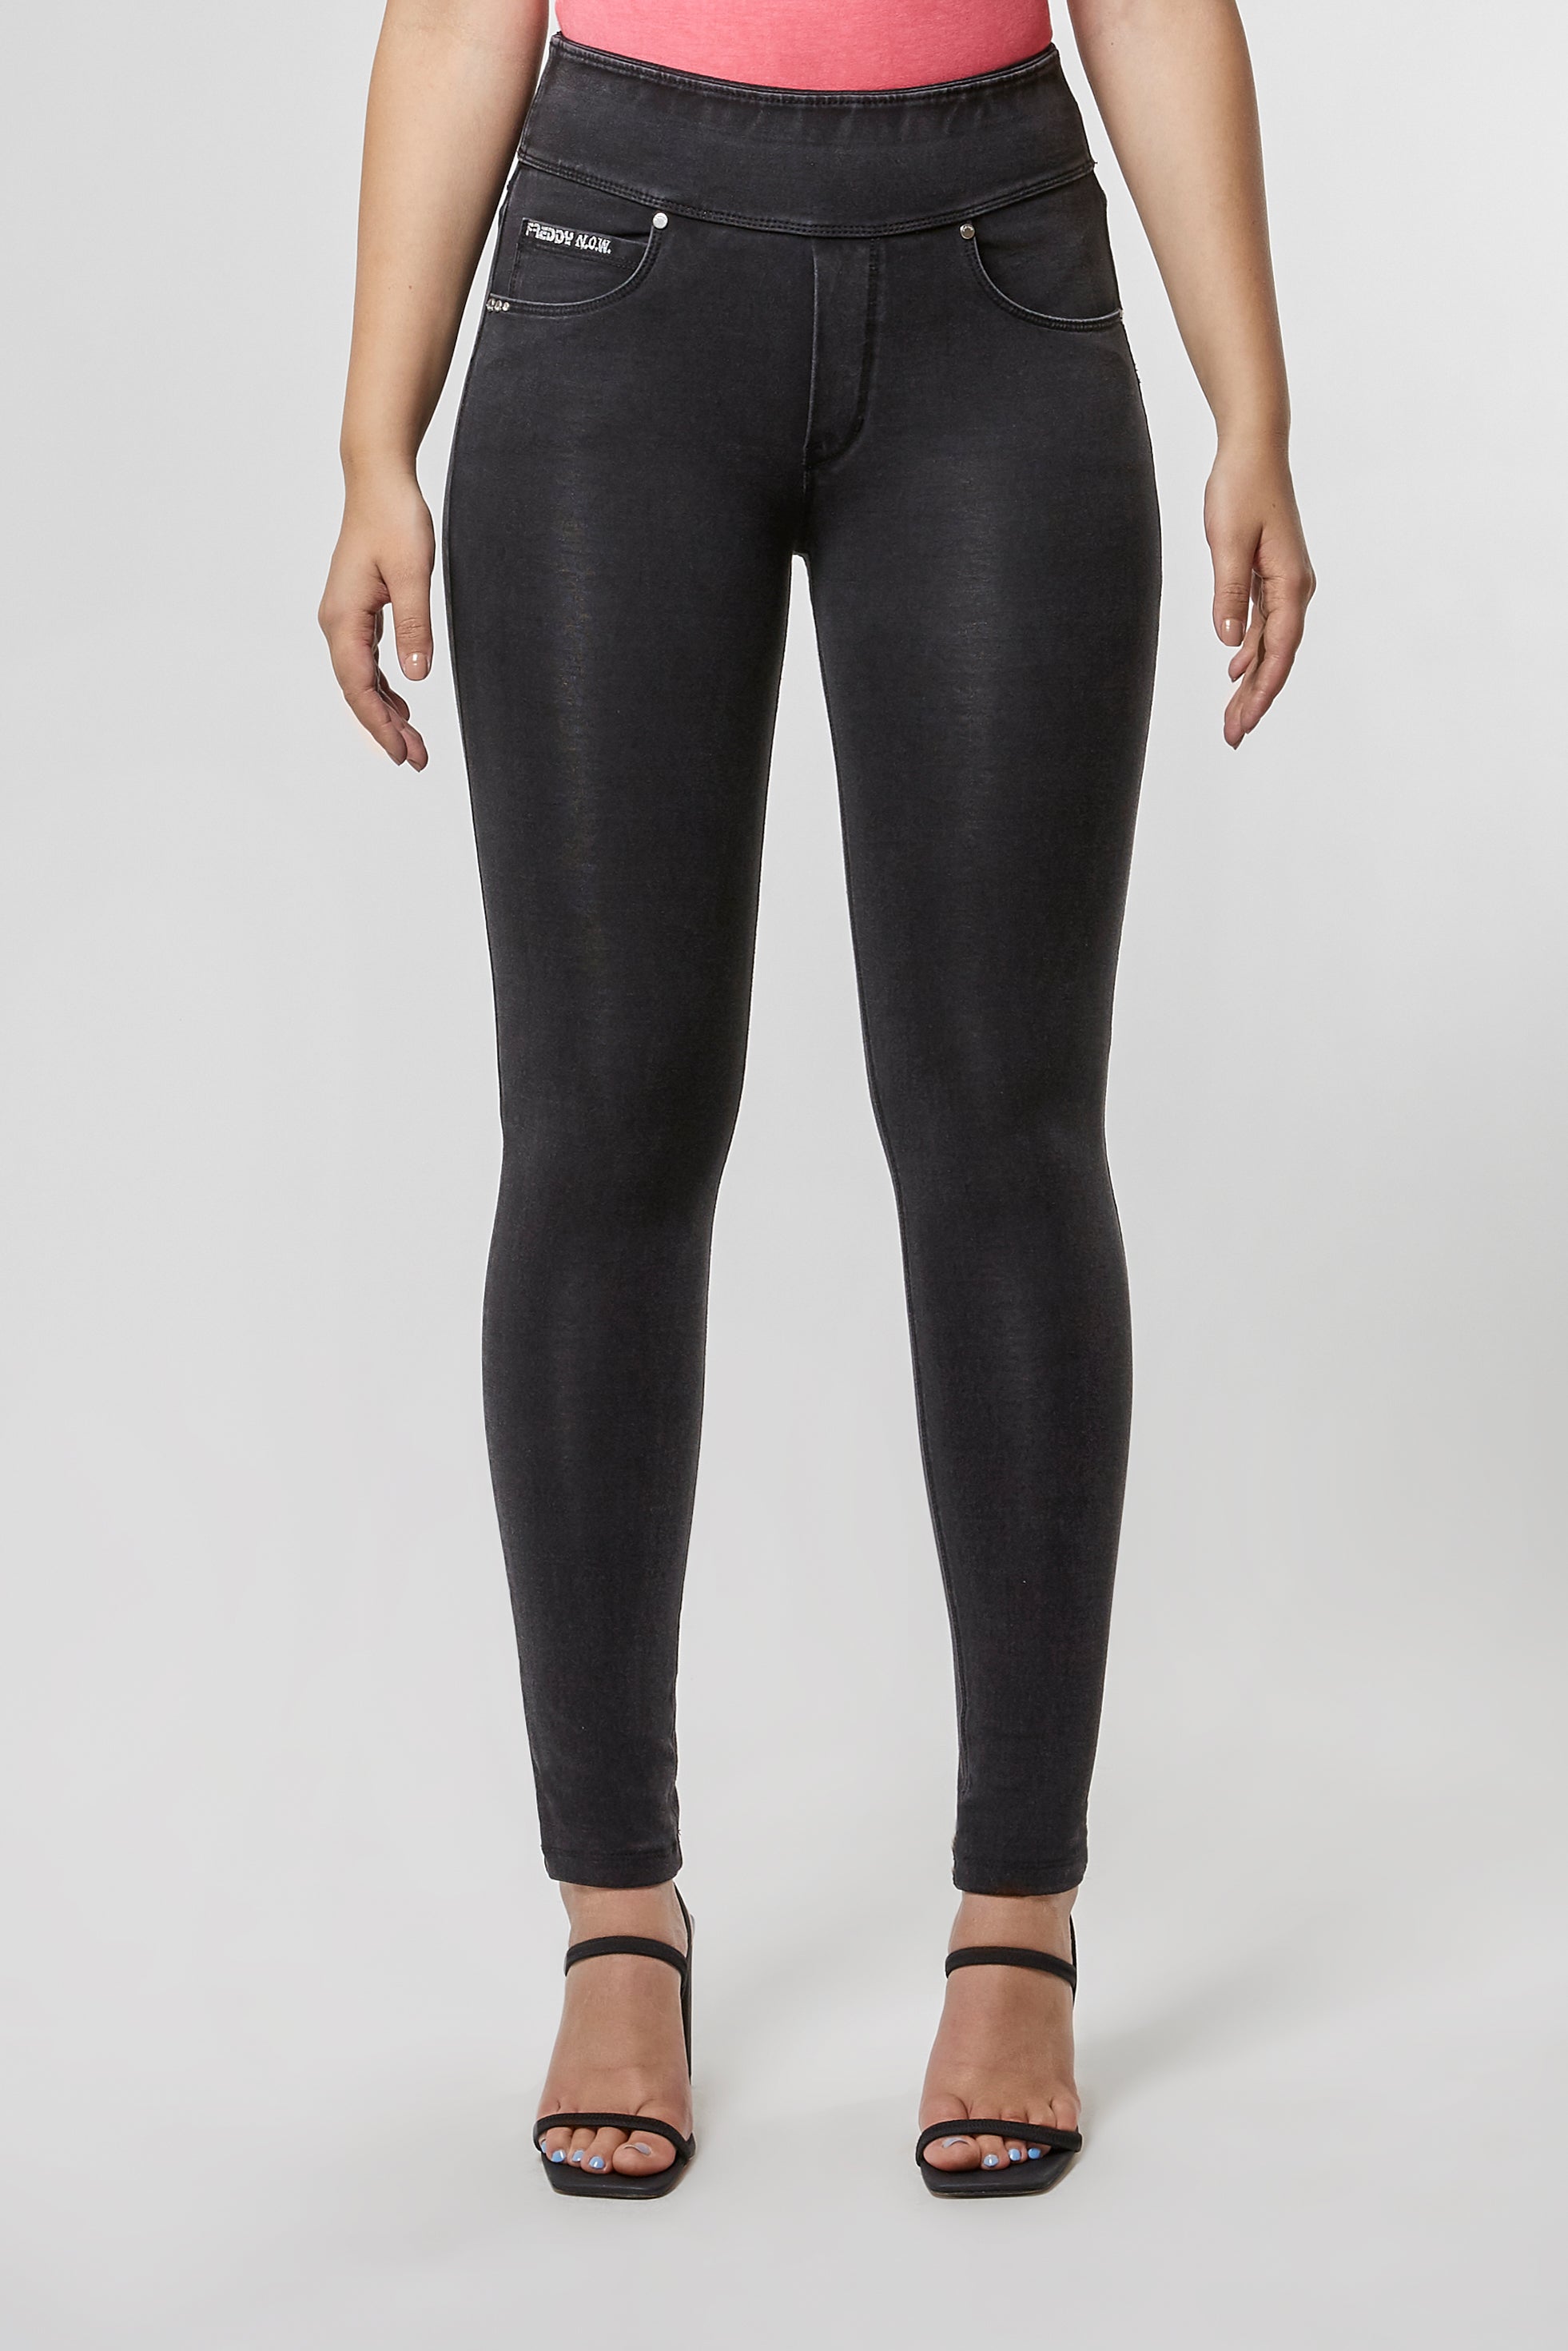 Bodyactive Dark Grey Melange Yoga Pants for Women, High Waist Workout Tummy  Control Pants-LL26-DGRY/BK